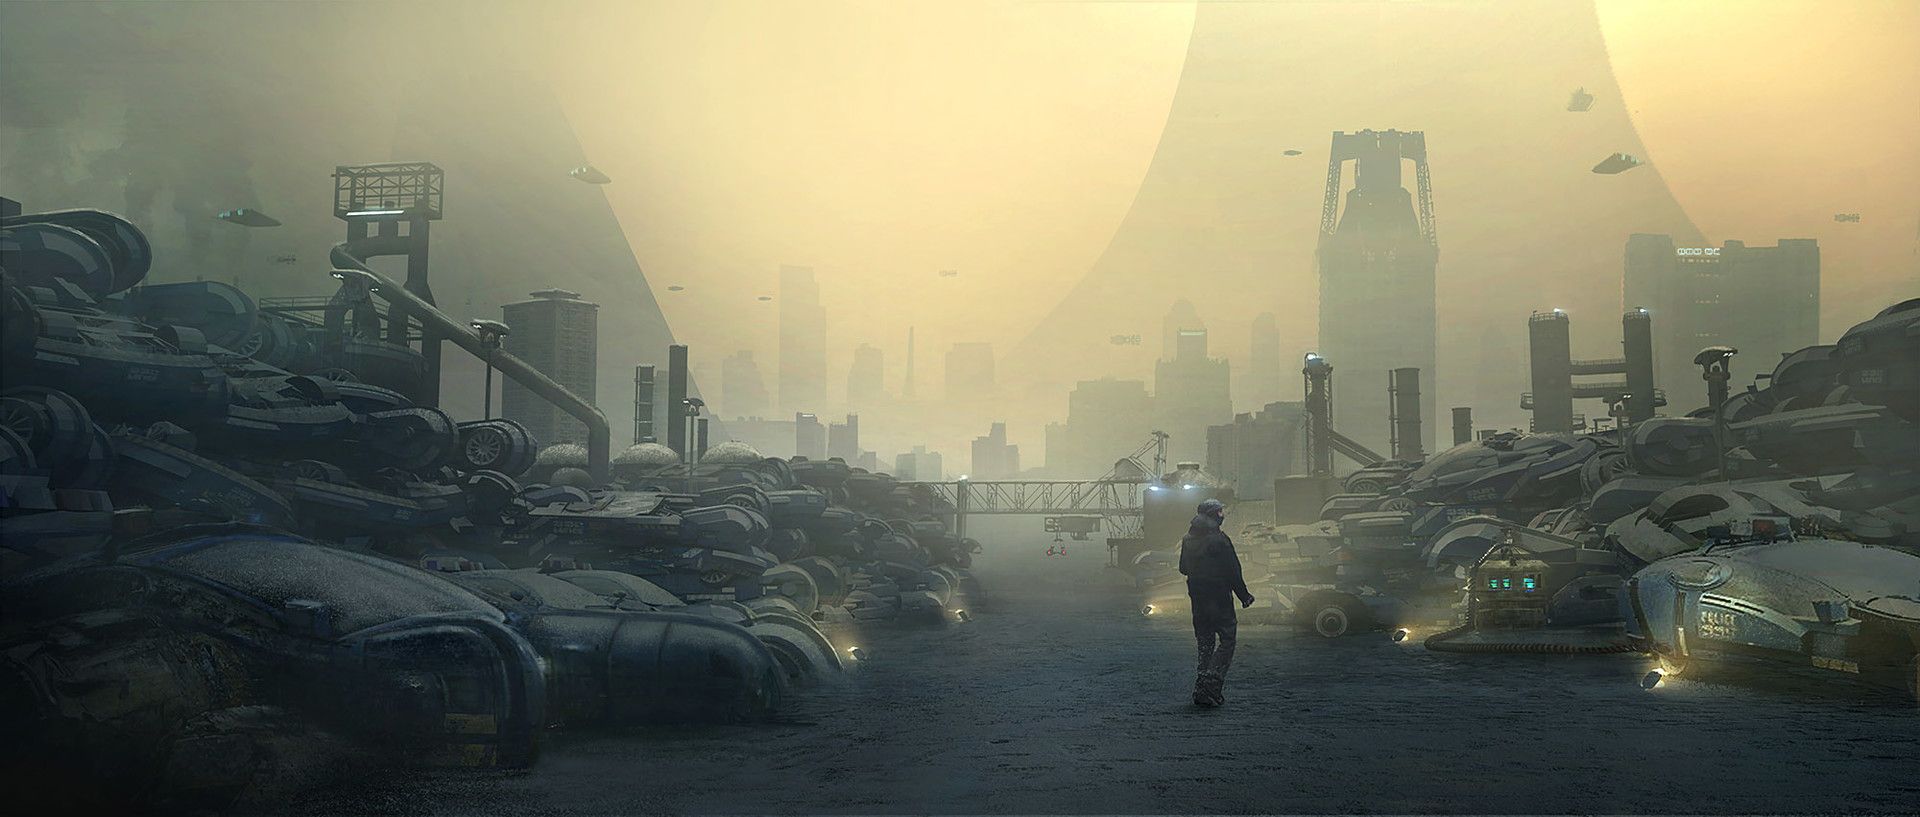 This Blade Runner 2049 Concept Art Is Mesmerising